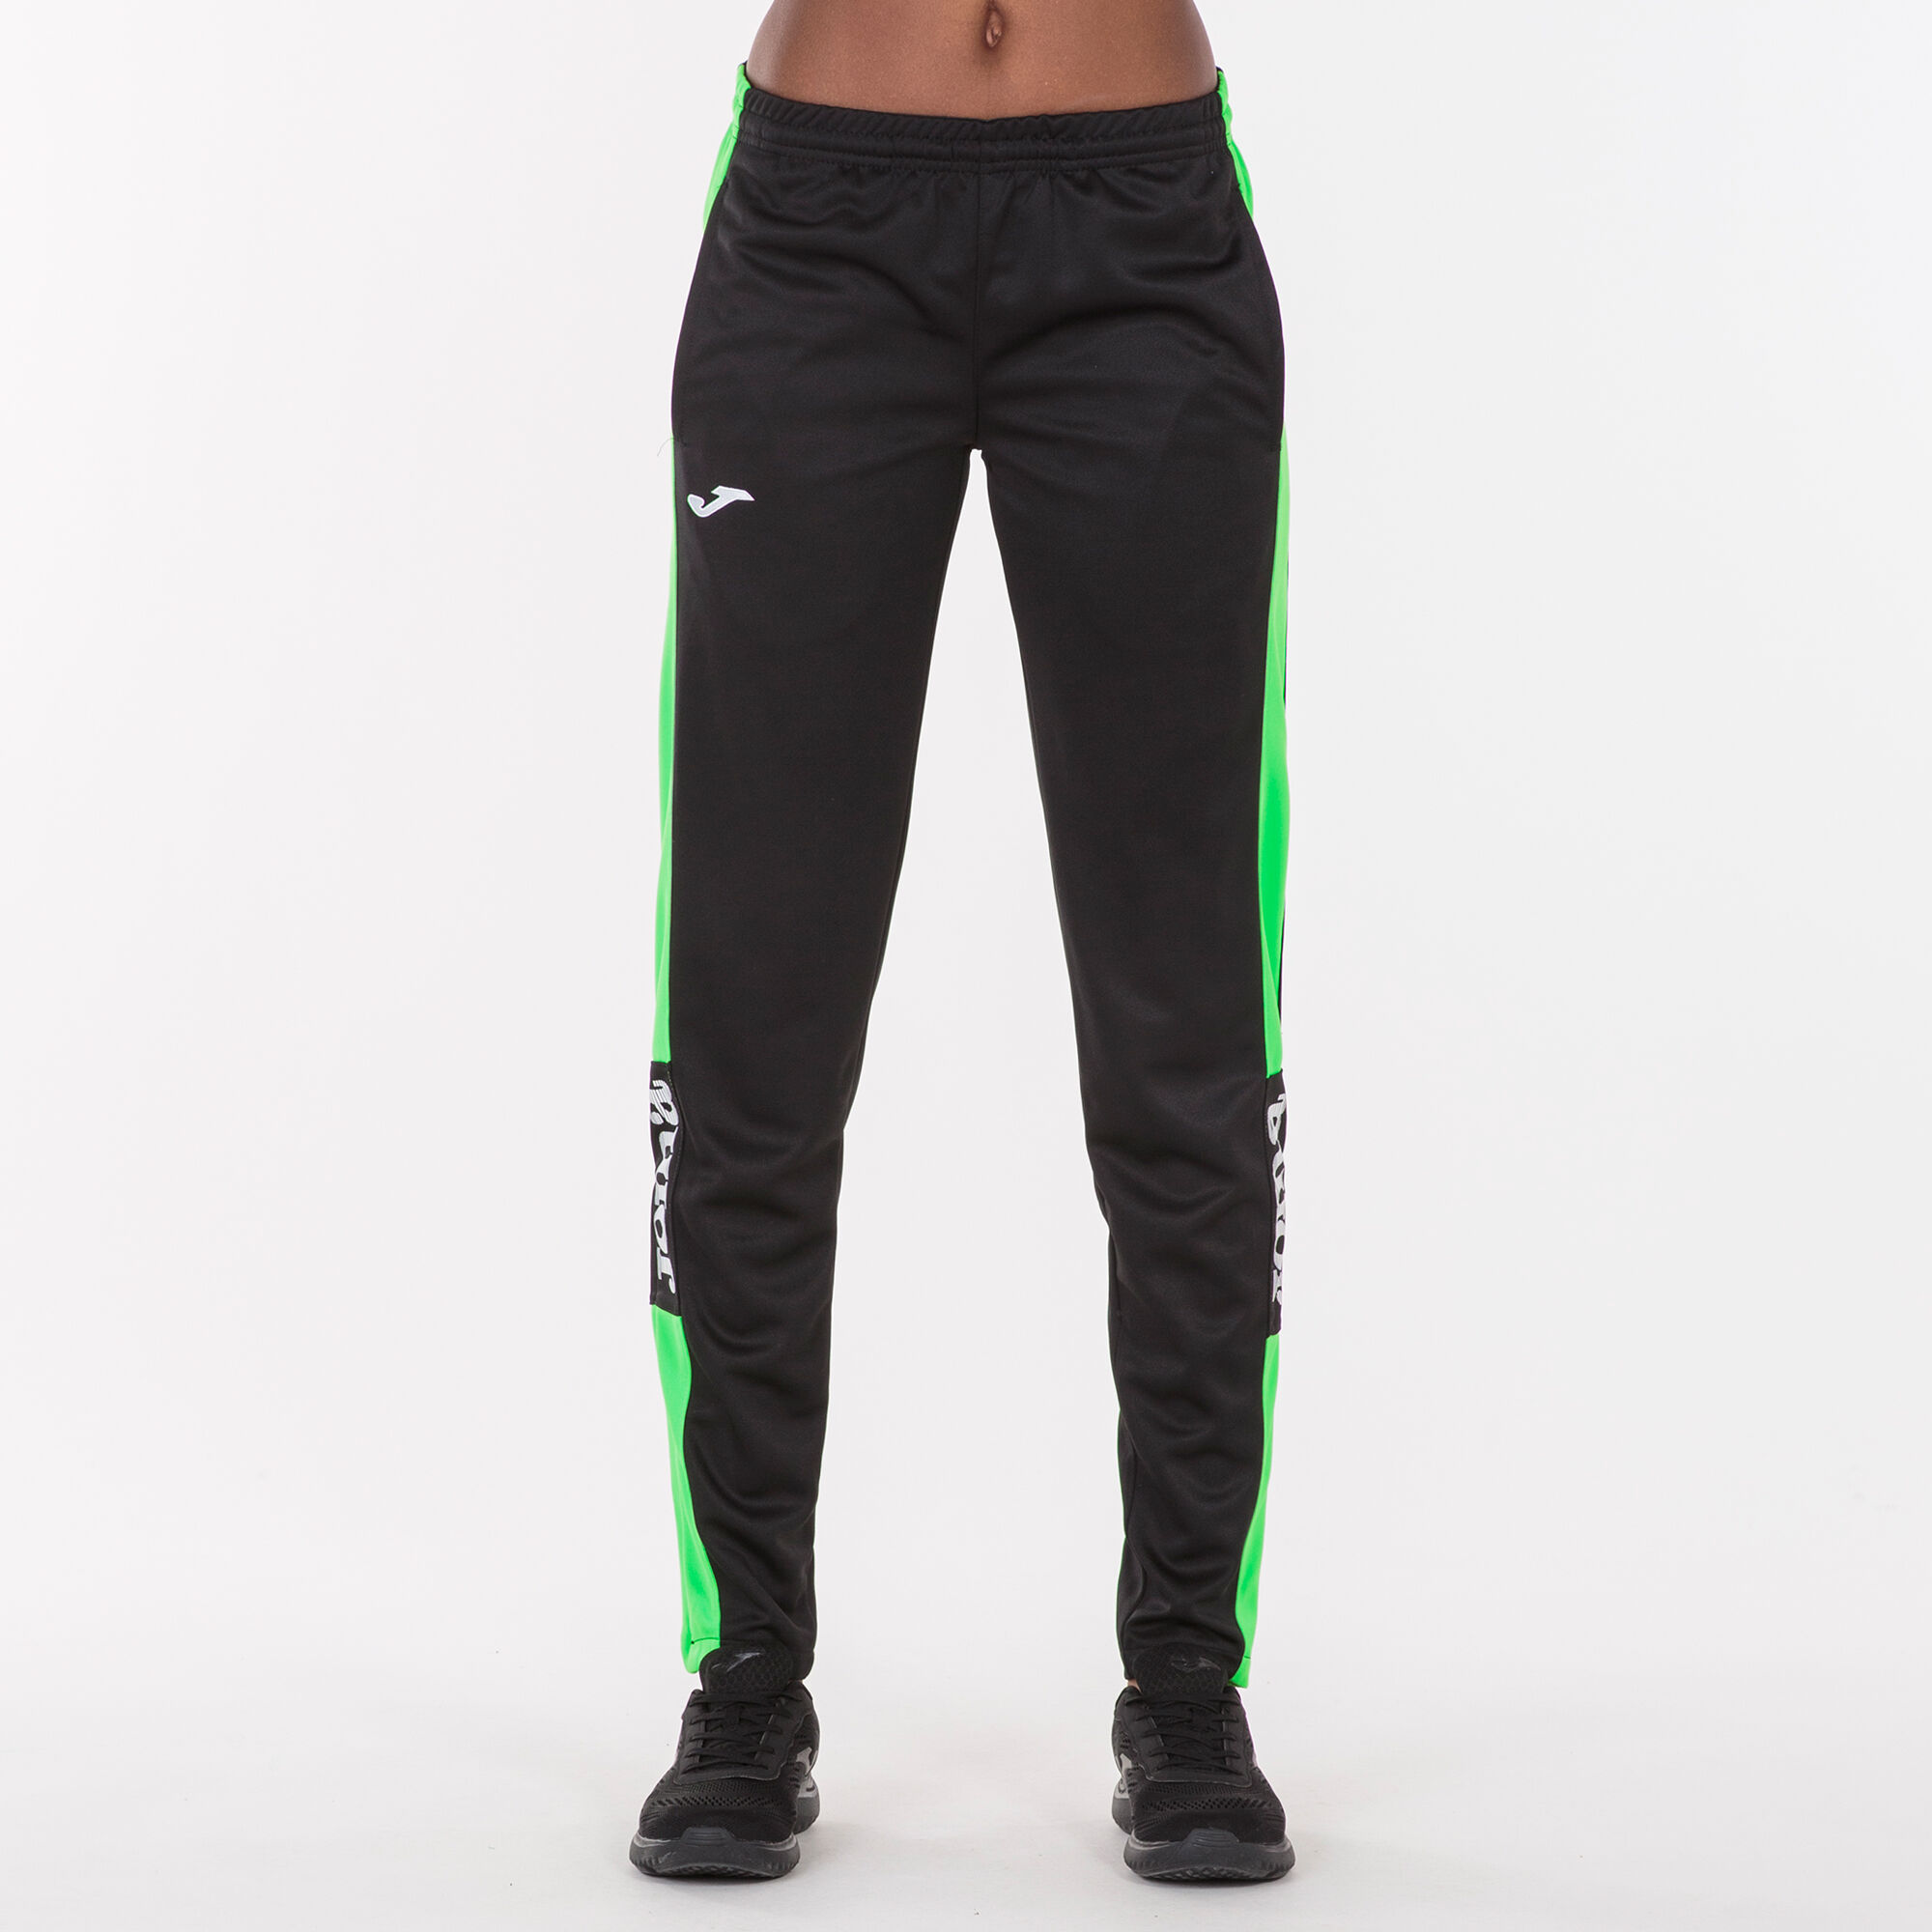 Calça comprida mulher Championship IV preto verde fluorescente